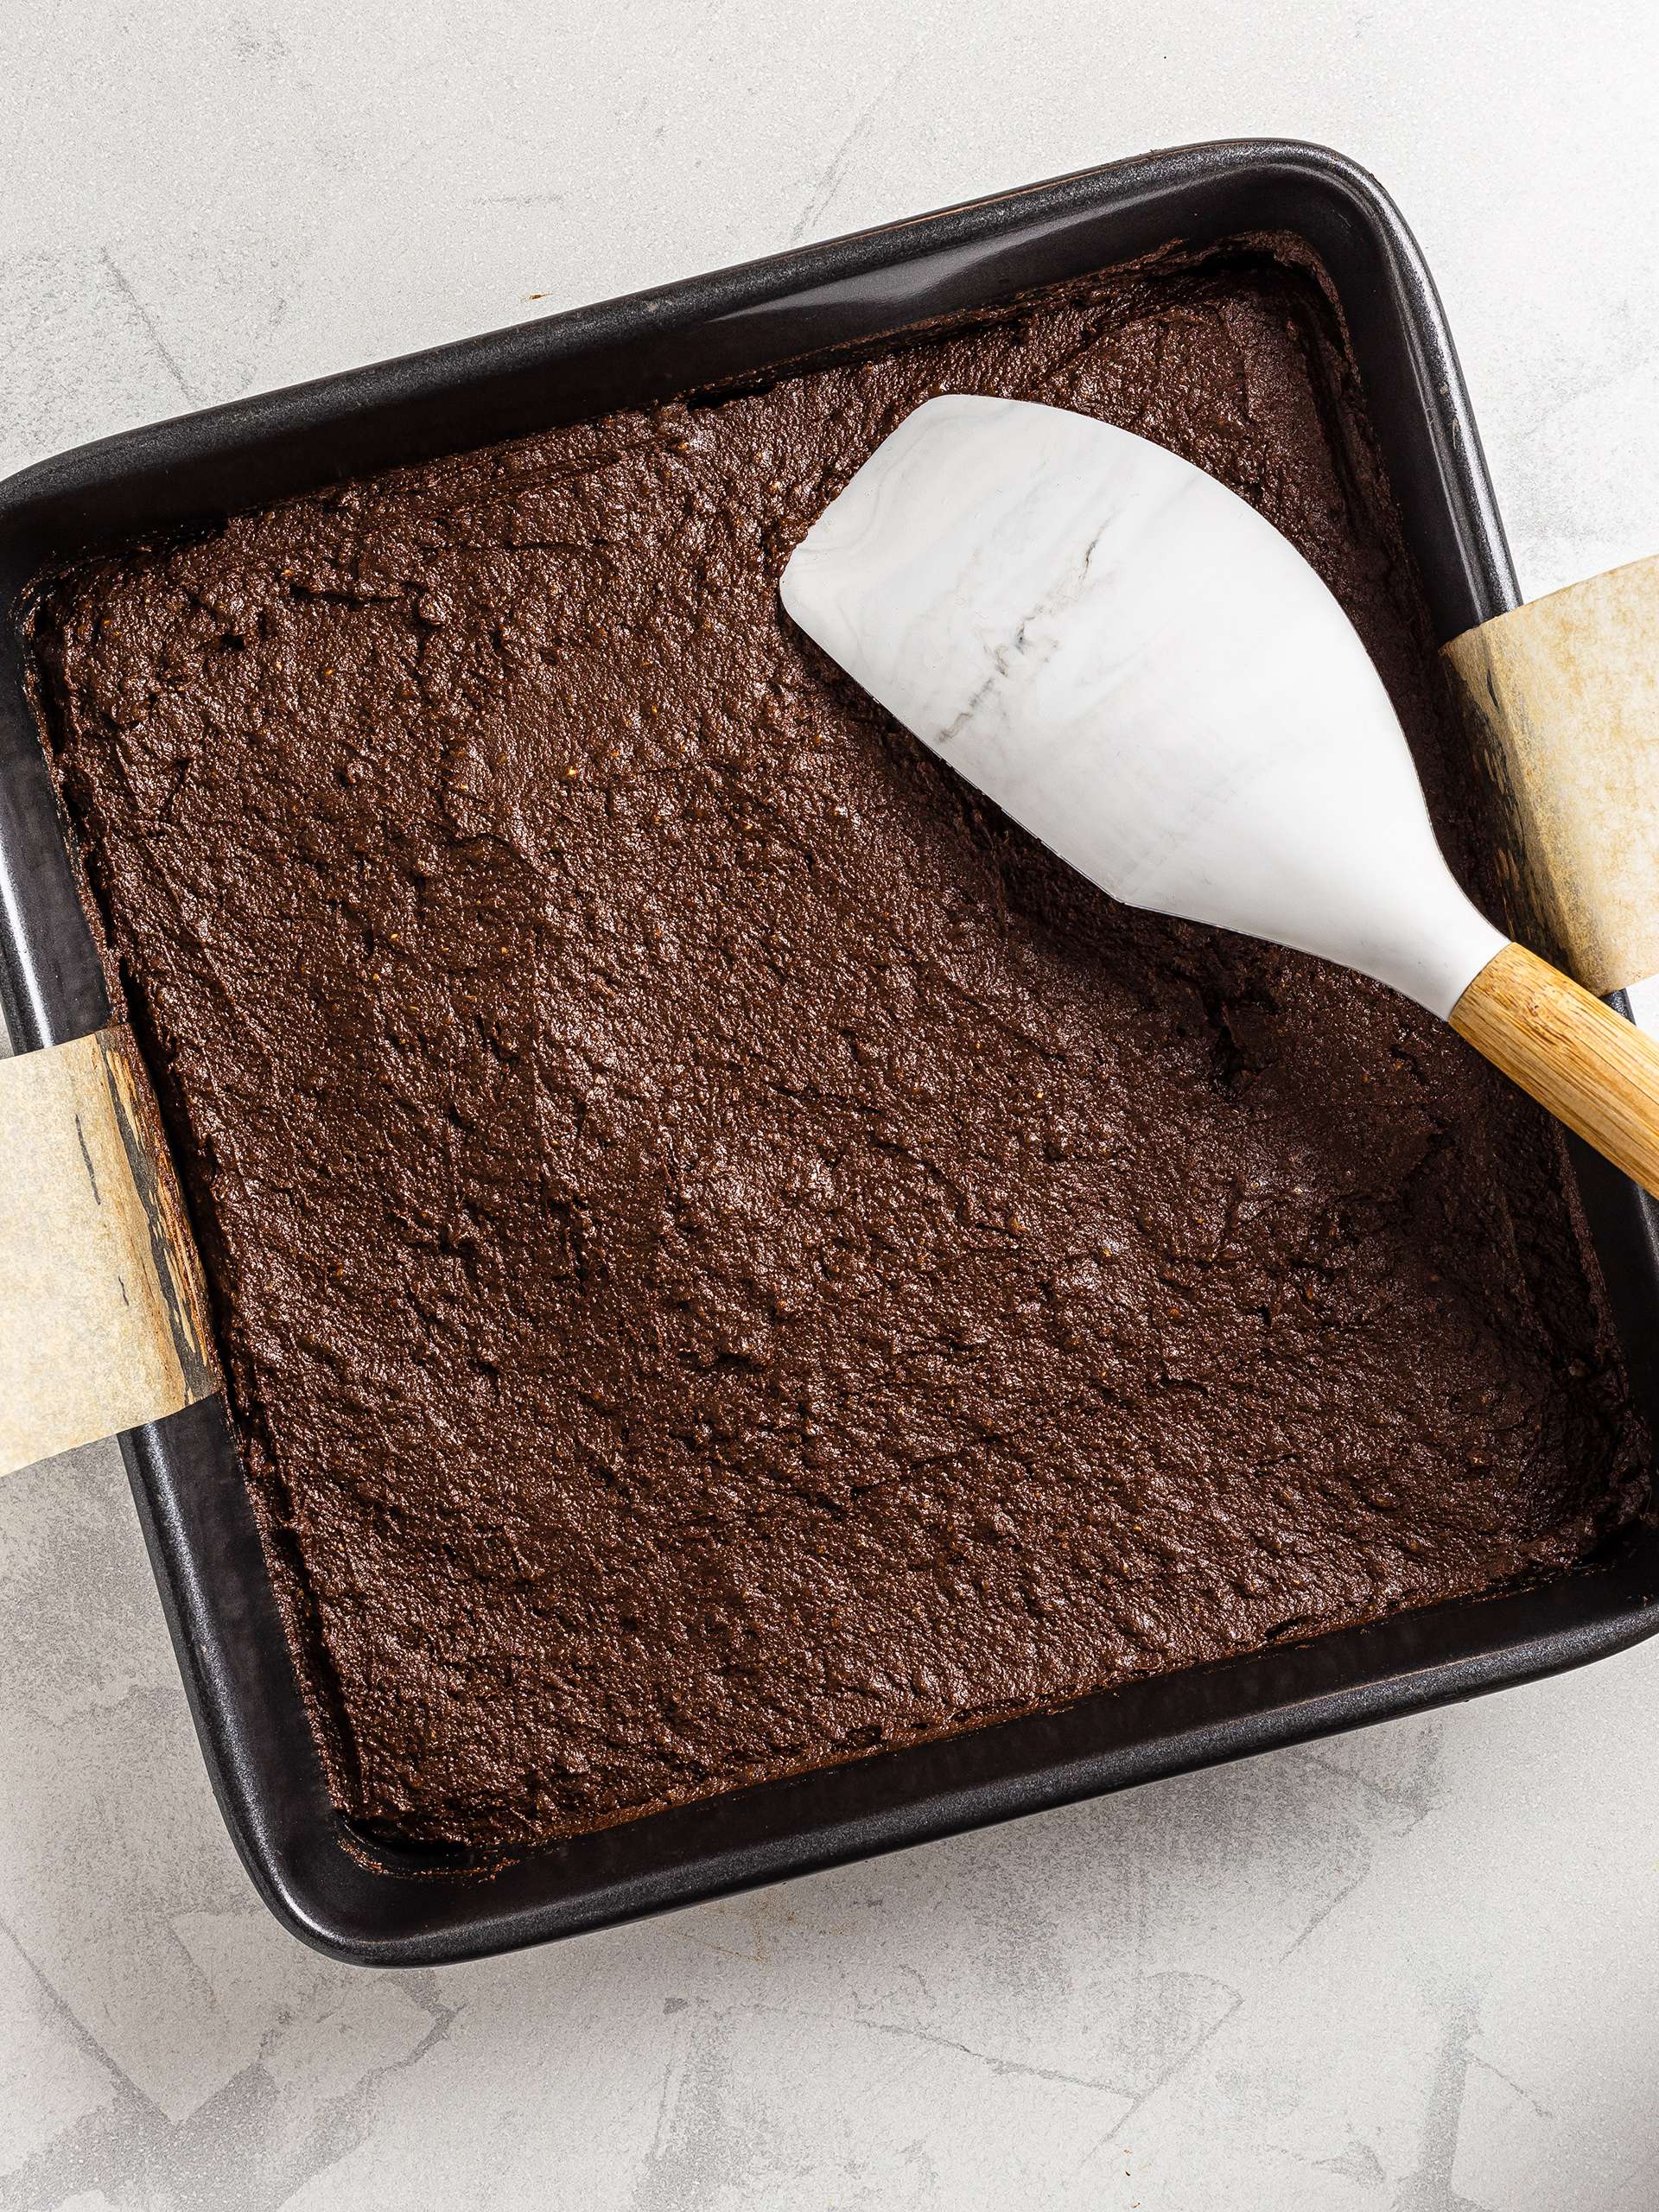 Brownie dough in baking pan